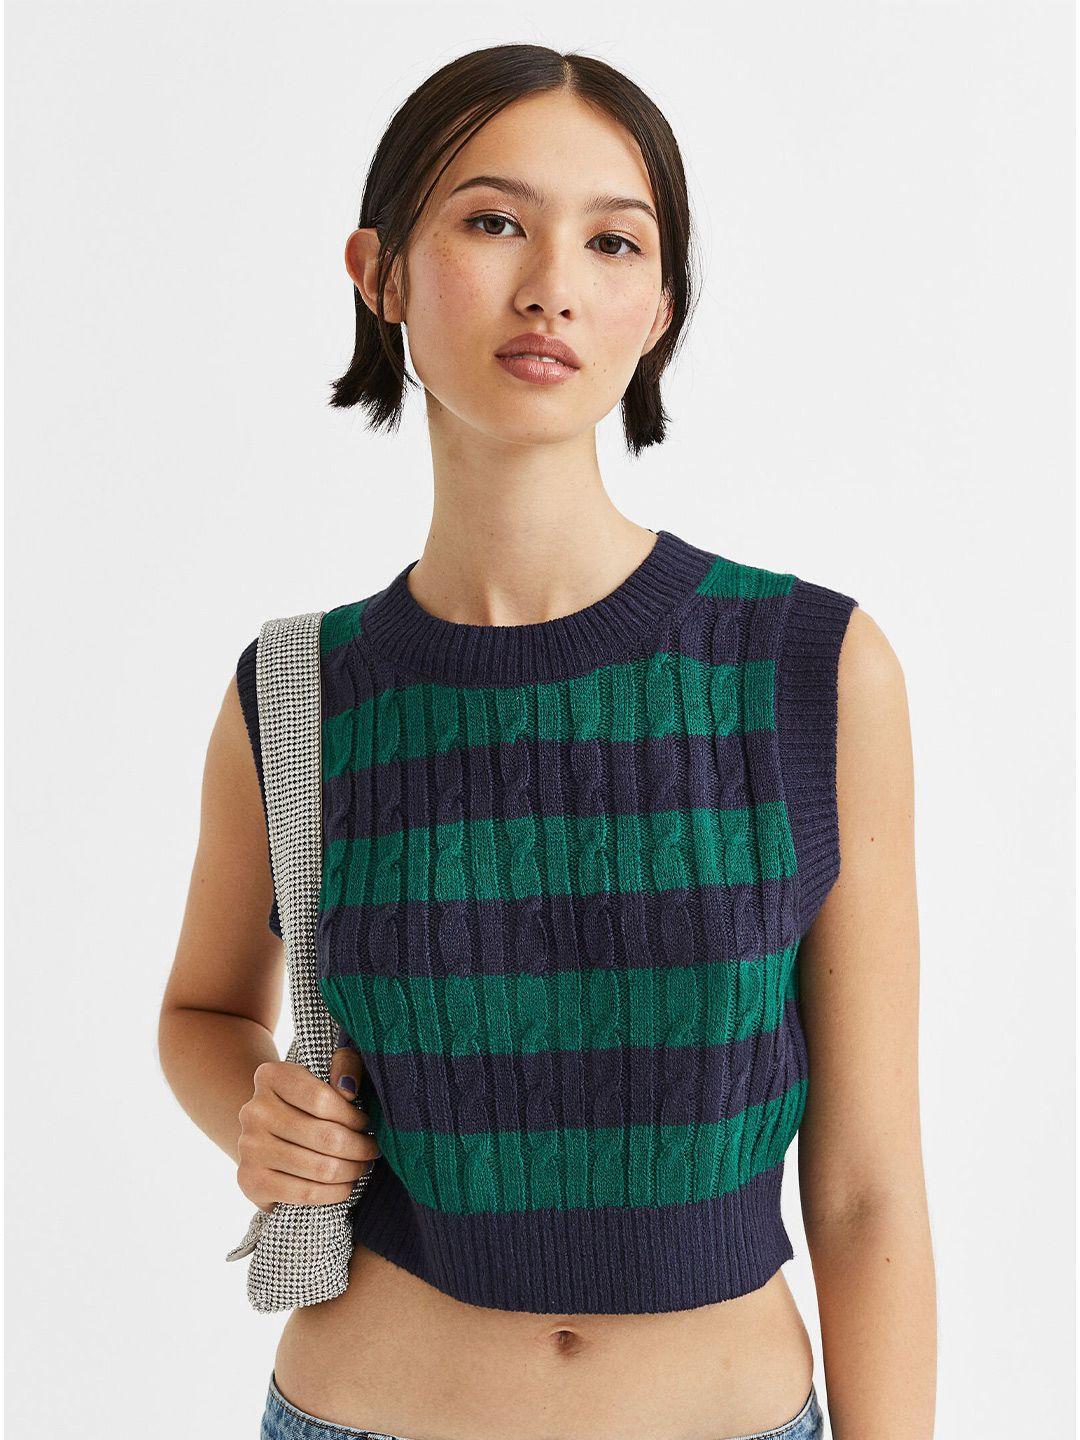 h&m-women-blue-&-green-jacquard-knit-sweater-vest